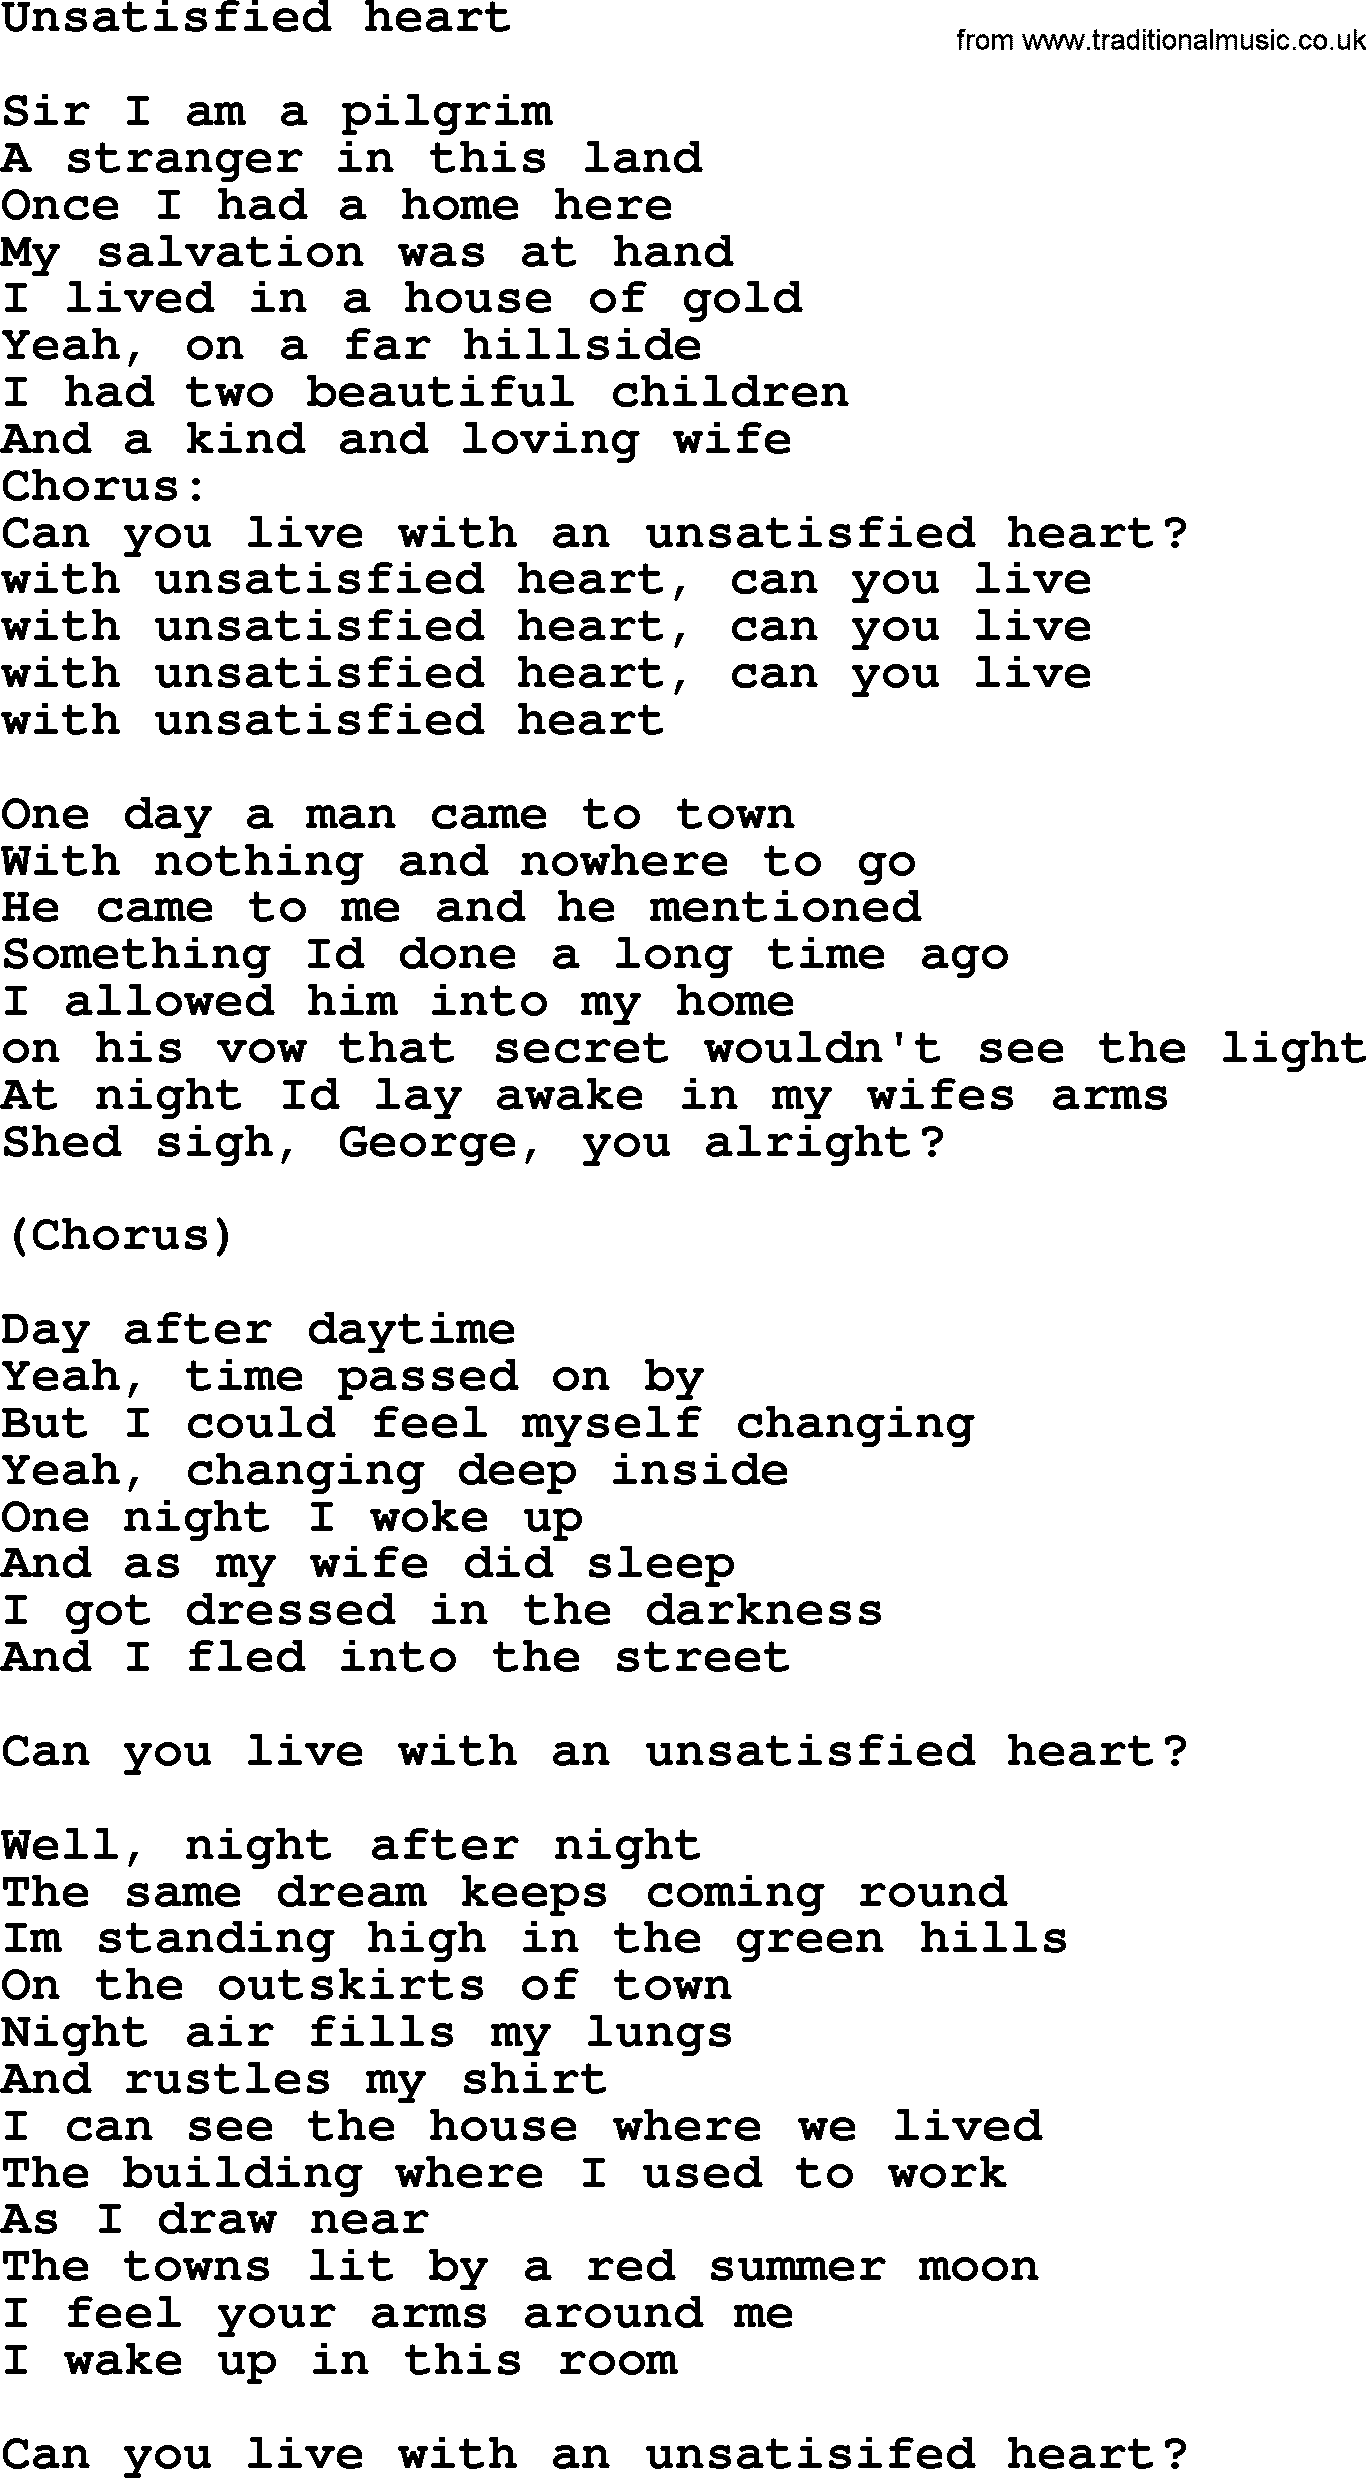 Bruce Springsteen song: Unsatisfied Heart lyrics